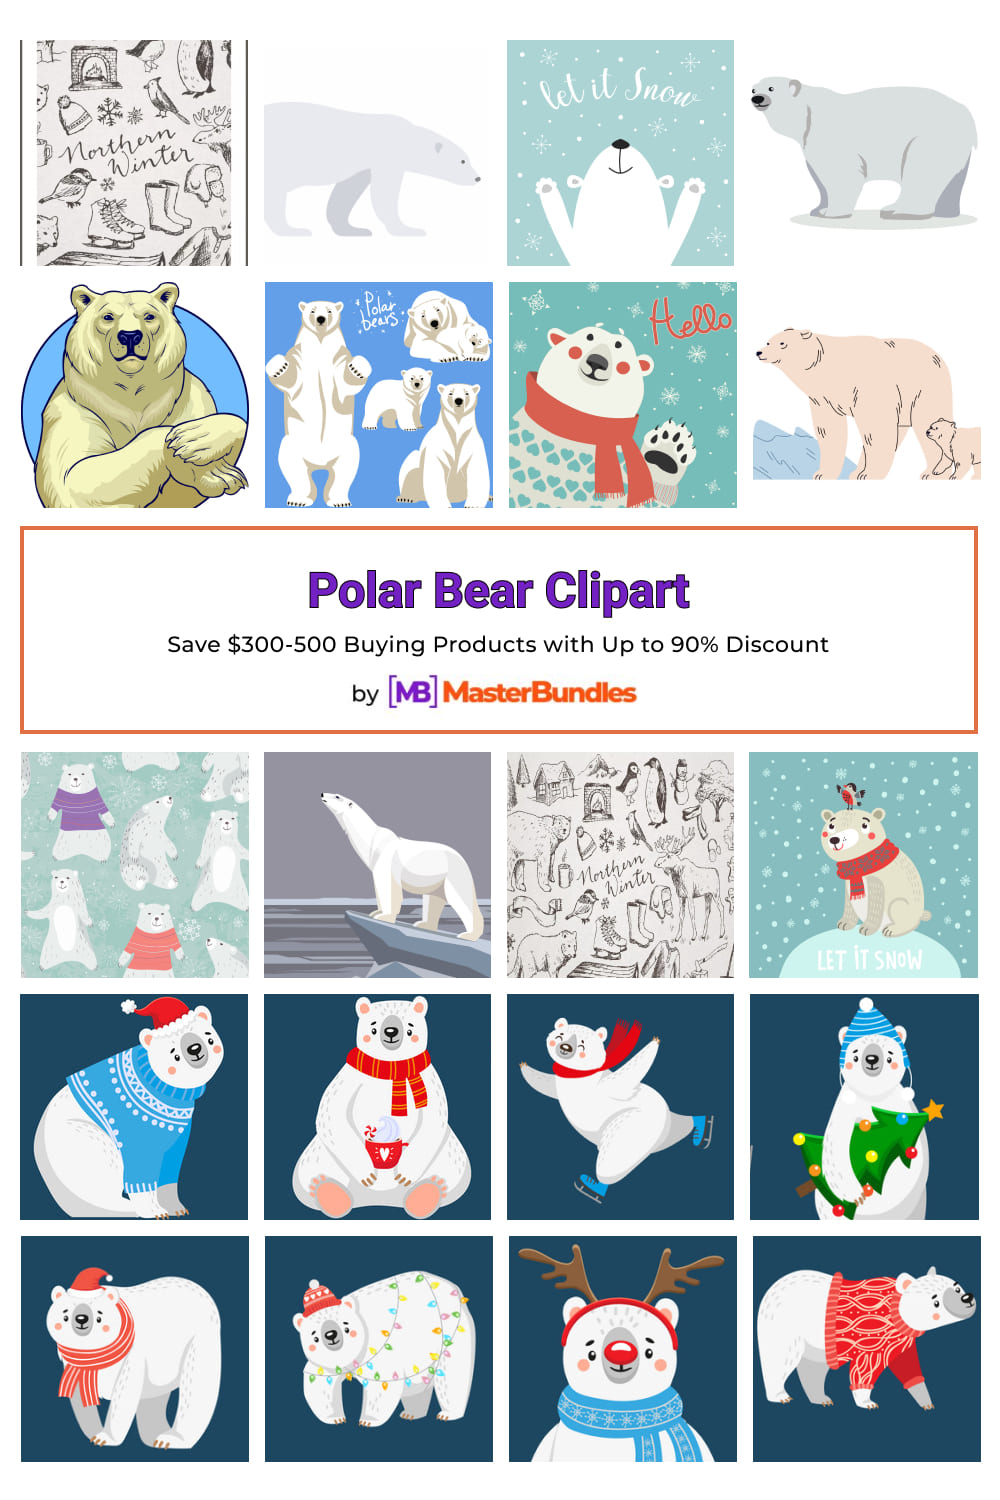 Polar Bear Clipart Pinterest image.